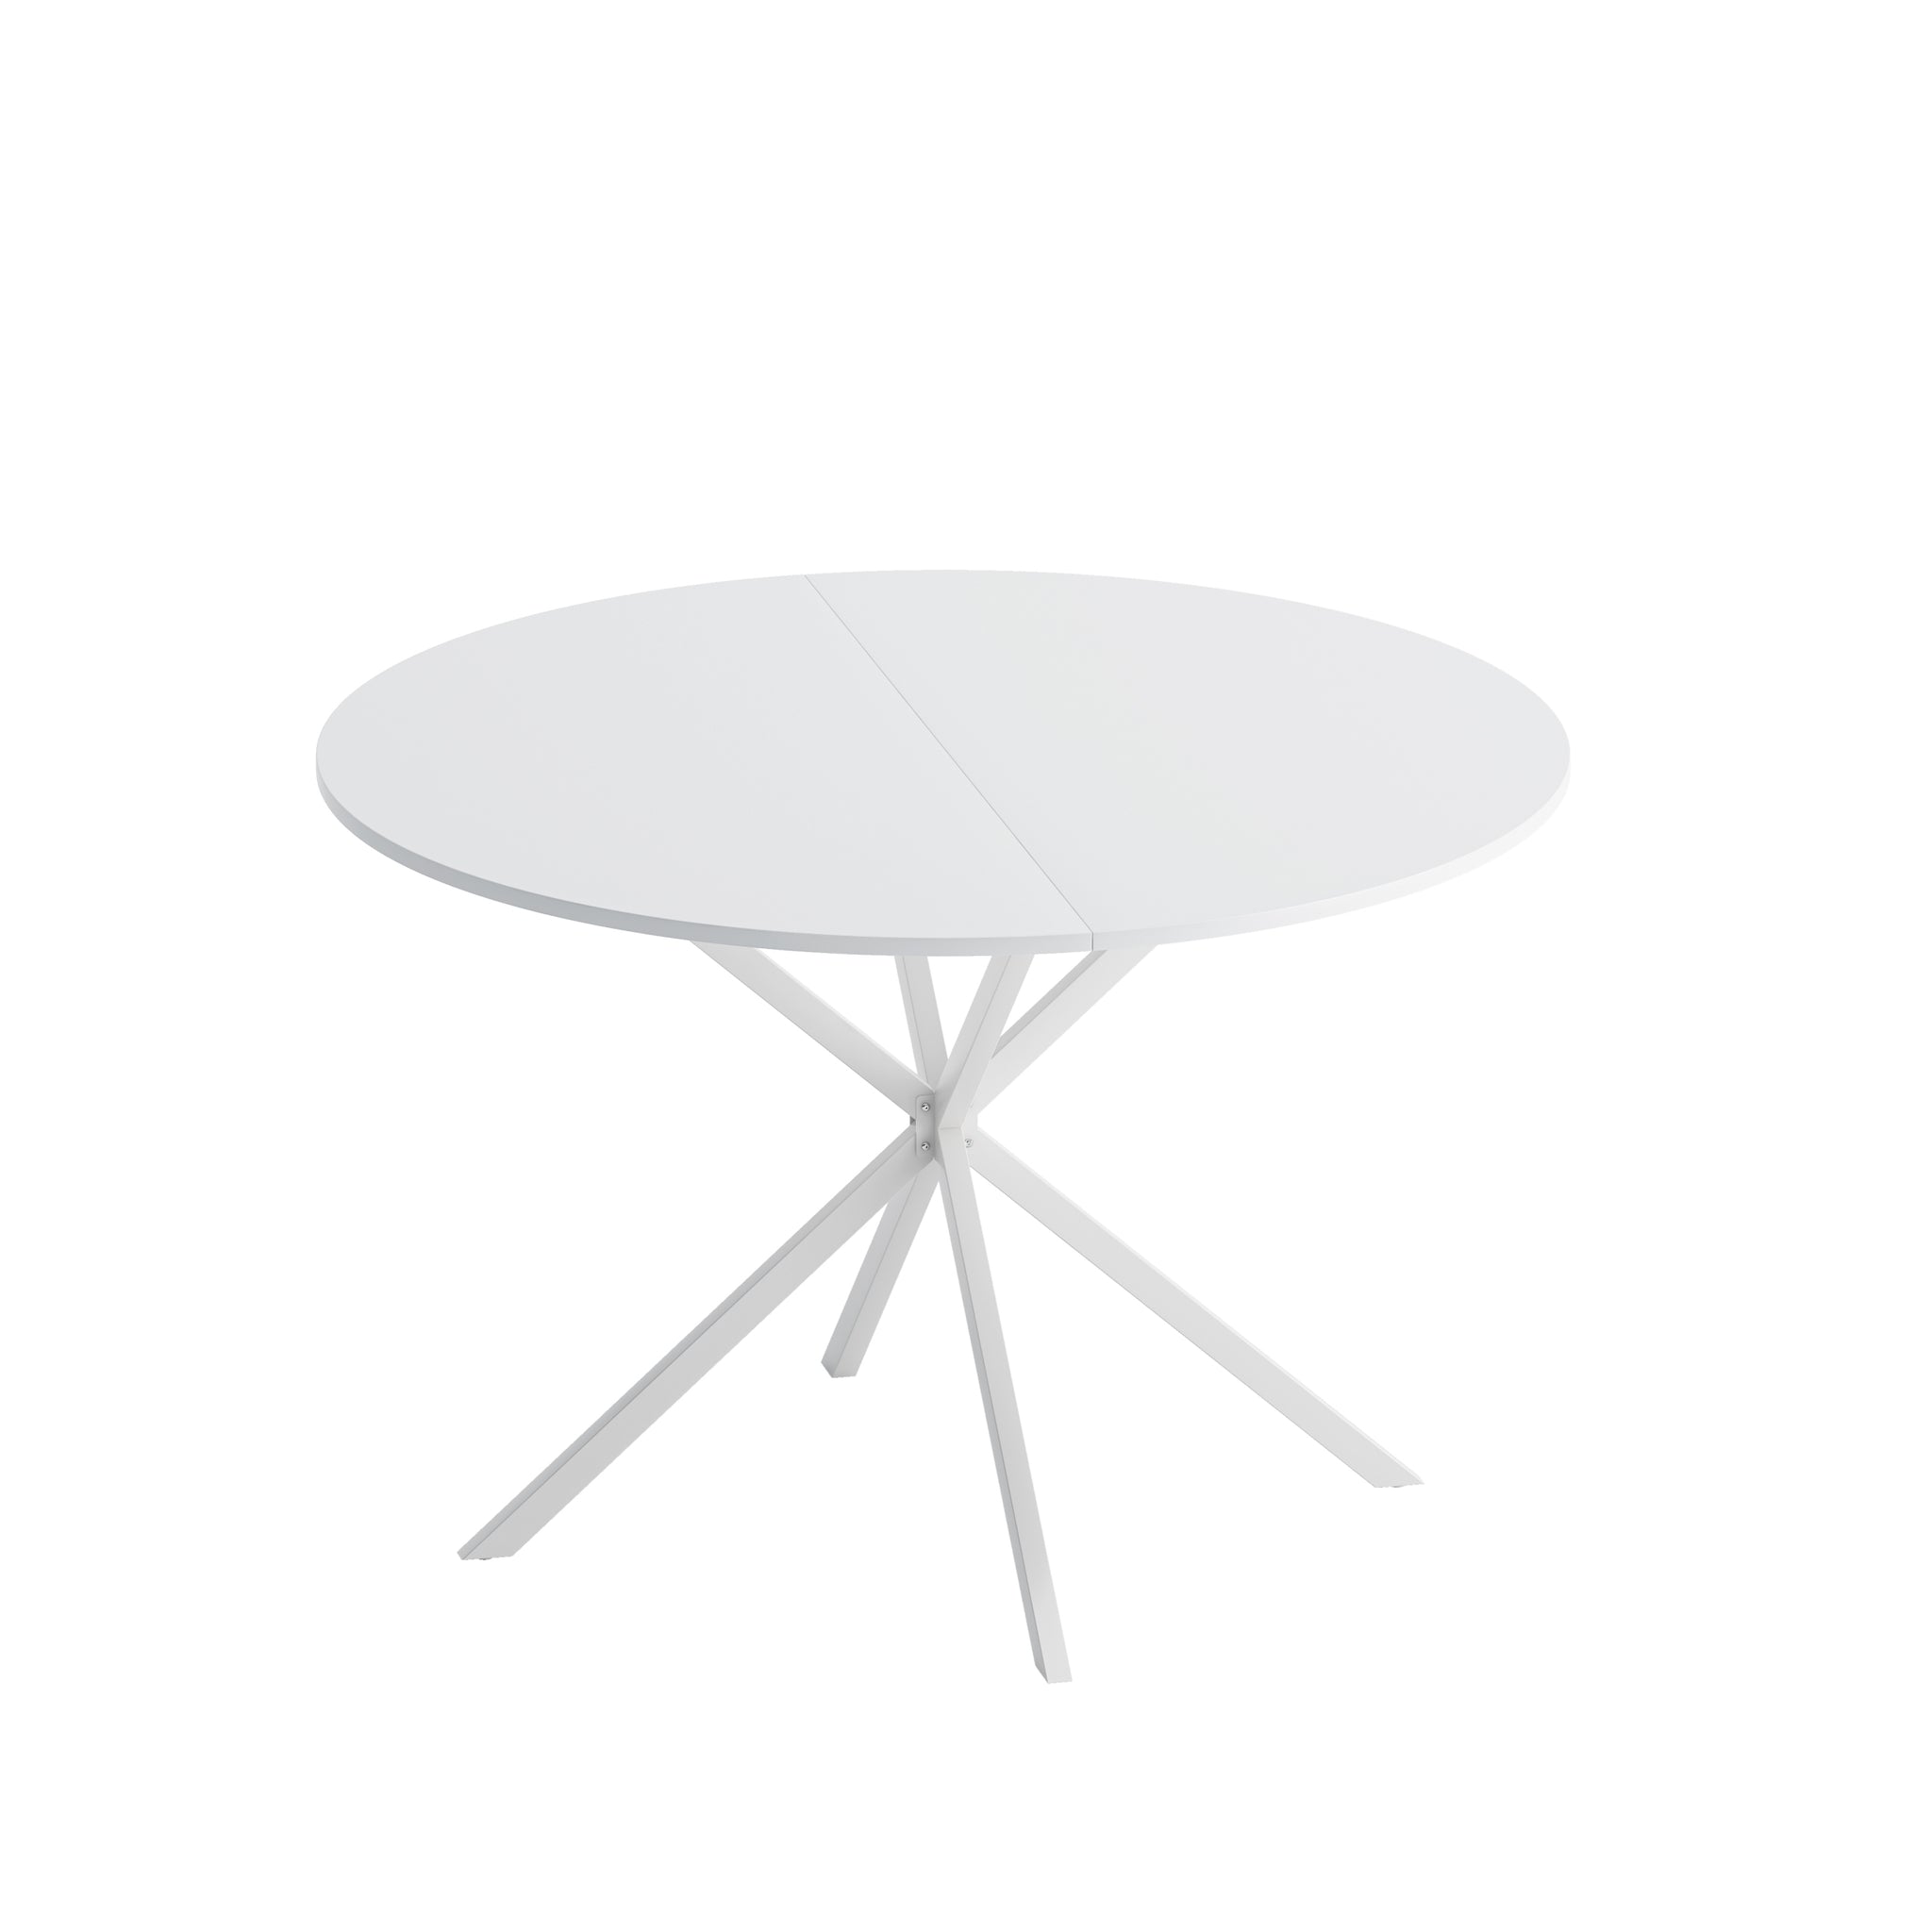 47.24'' Modern Cross Leg Round Dining Table, White Top white-mdf+metal